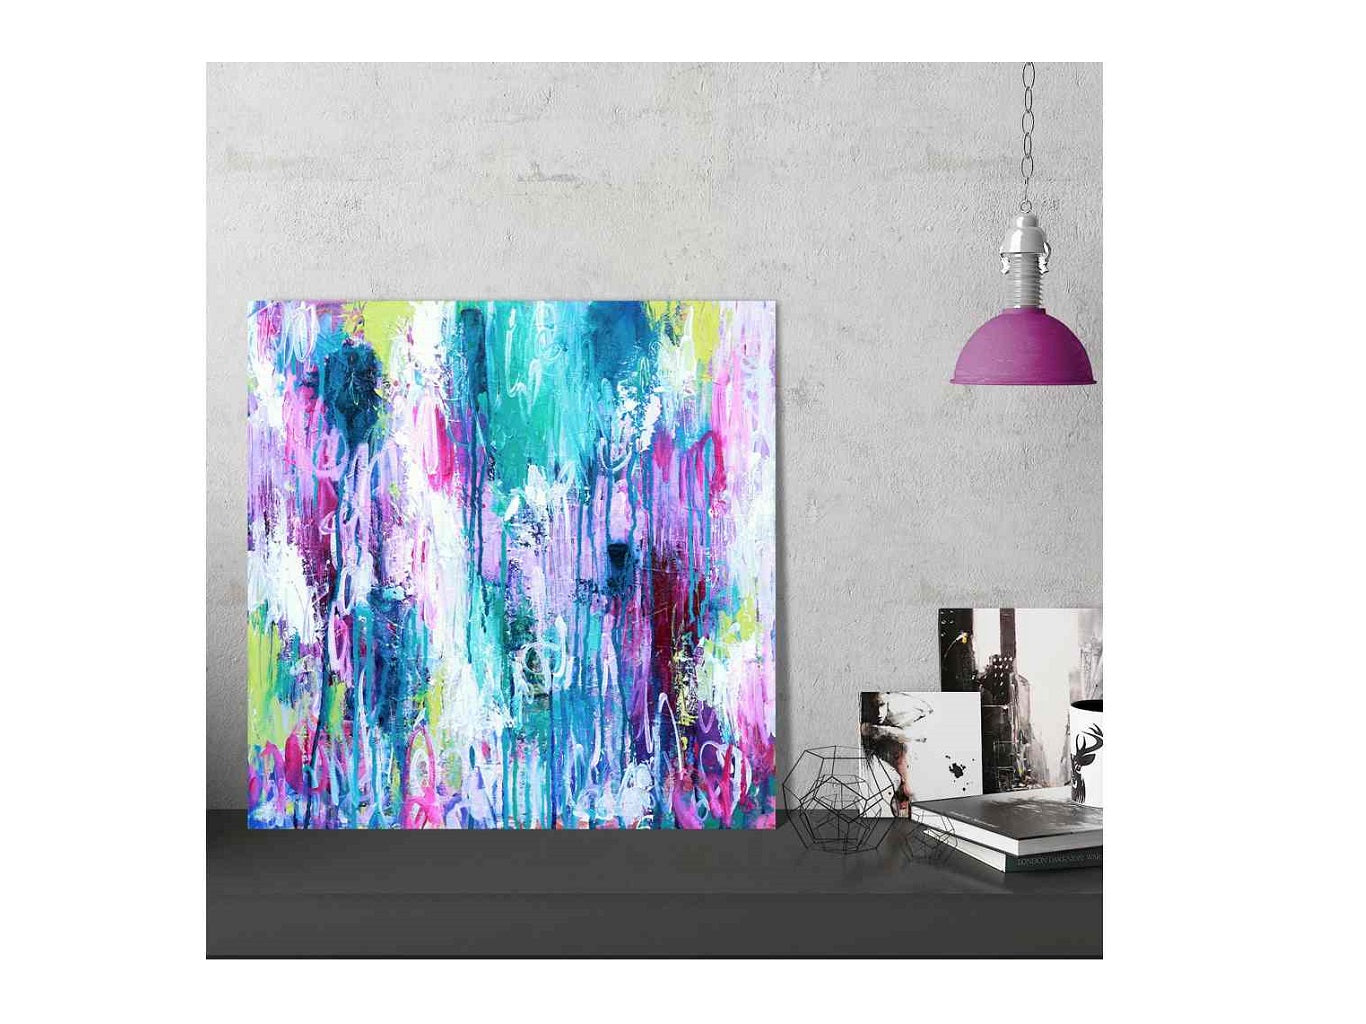 AM 106 Season of Change acrylic - painting - canvas - abstract - colorful - art - decor Audree Marsolais (1)